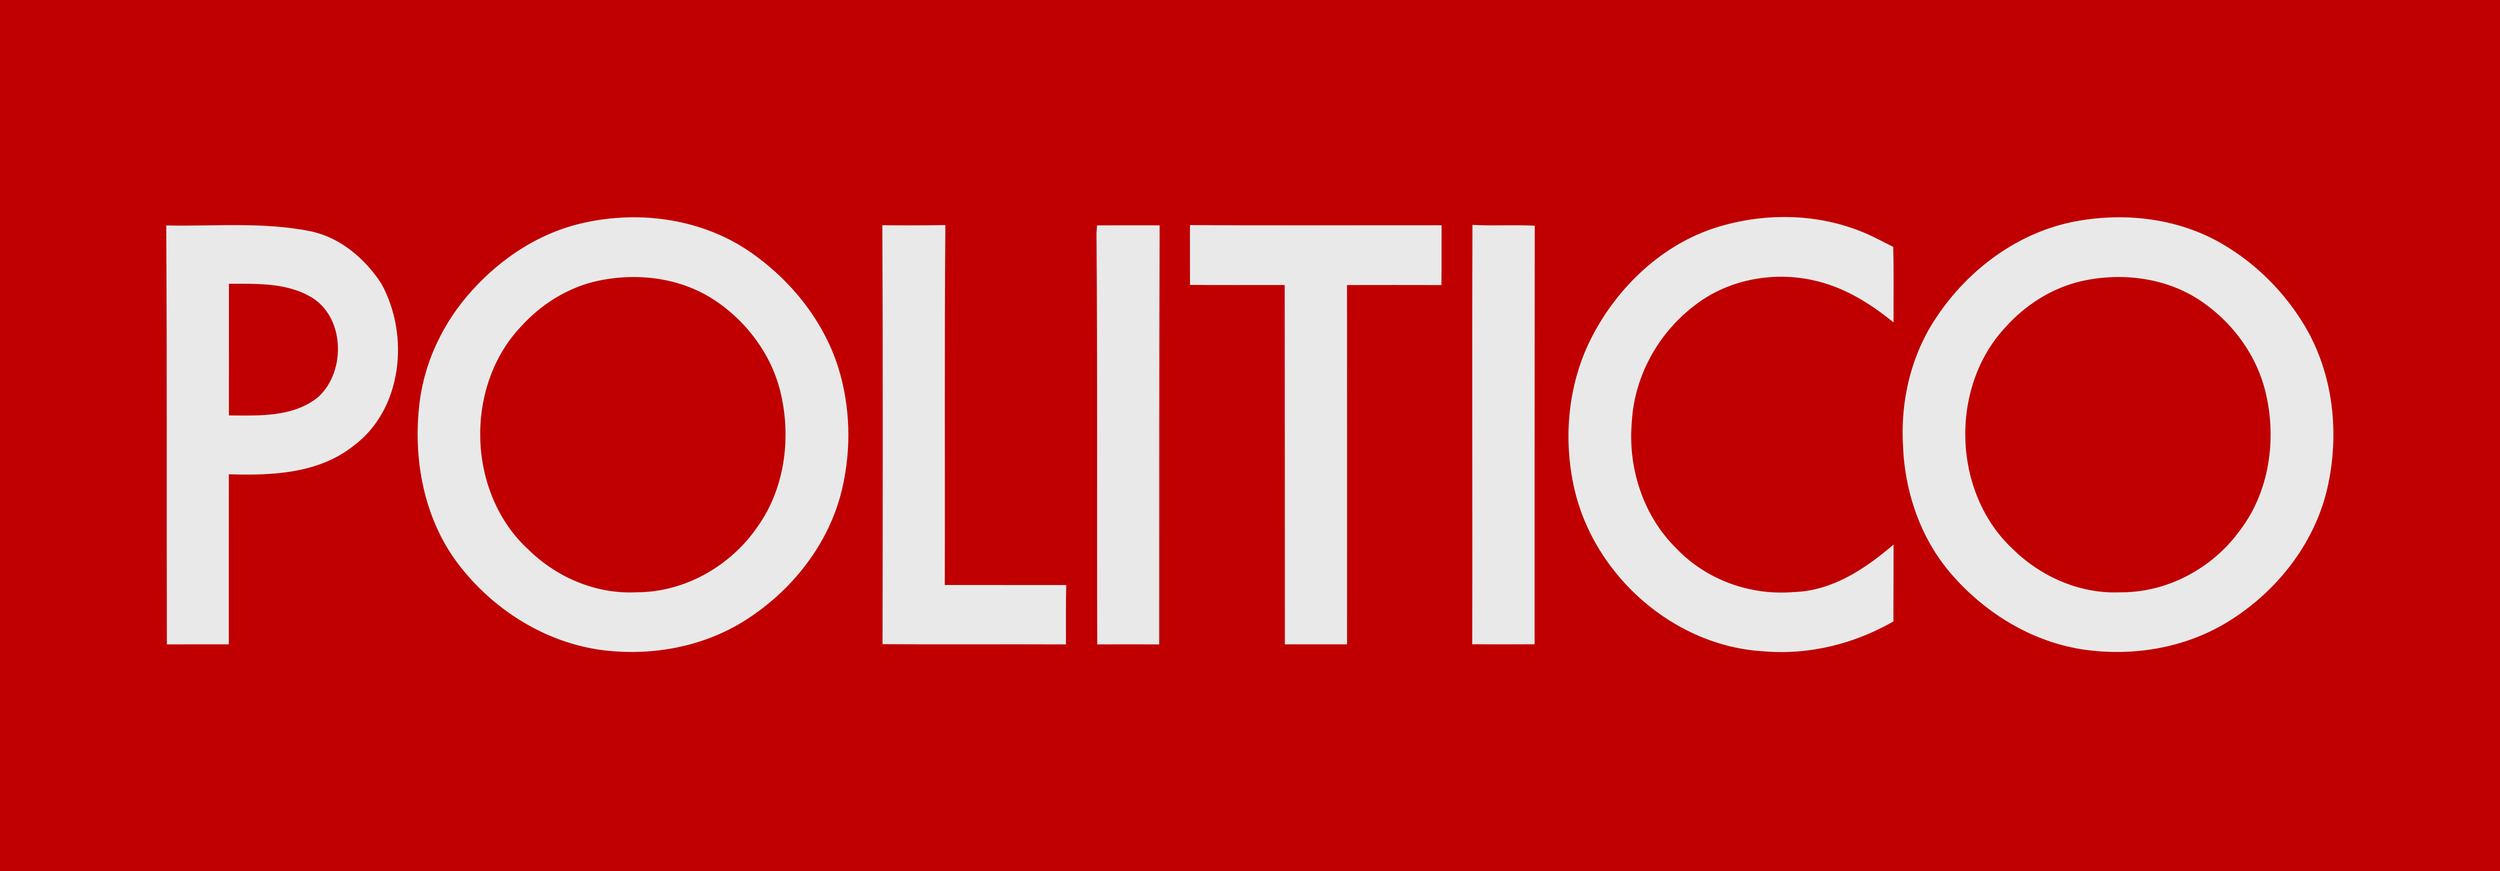 Politico_Logo.png